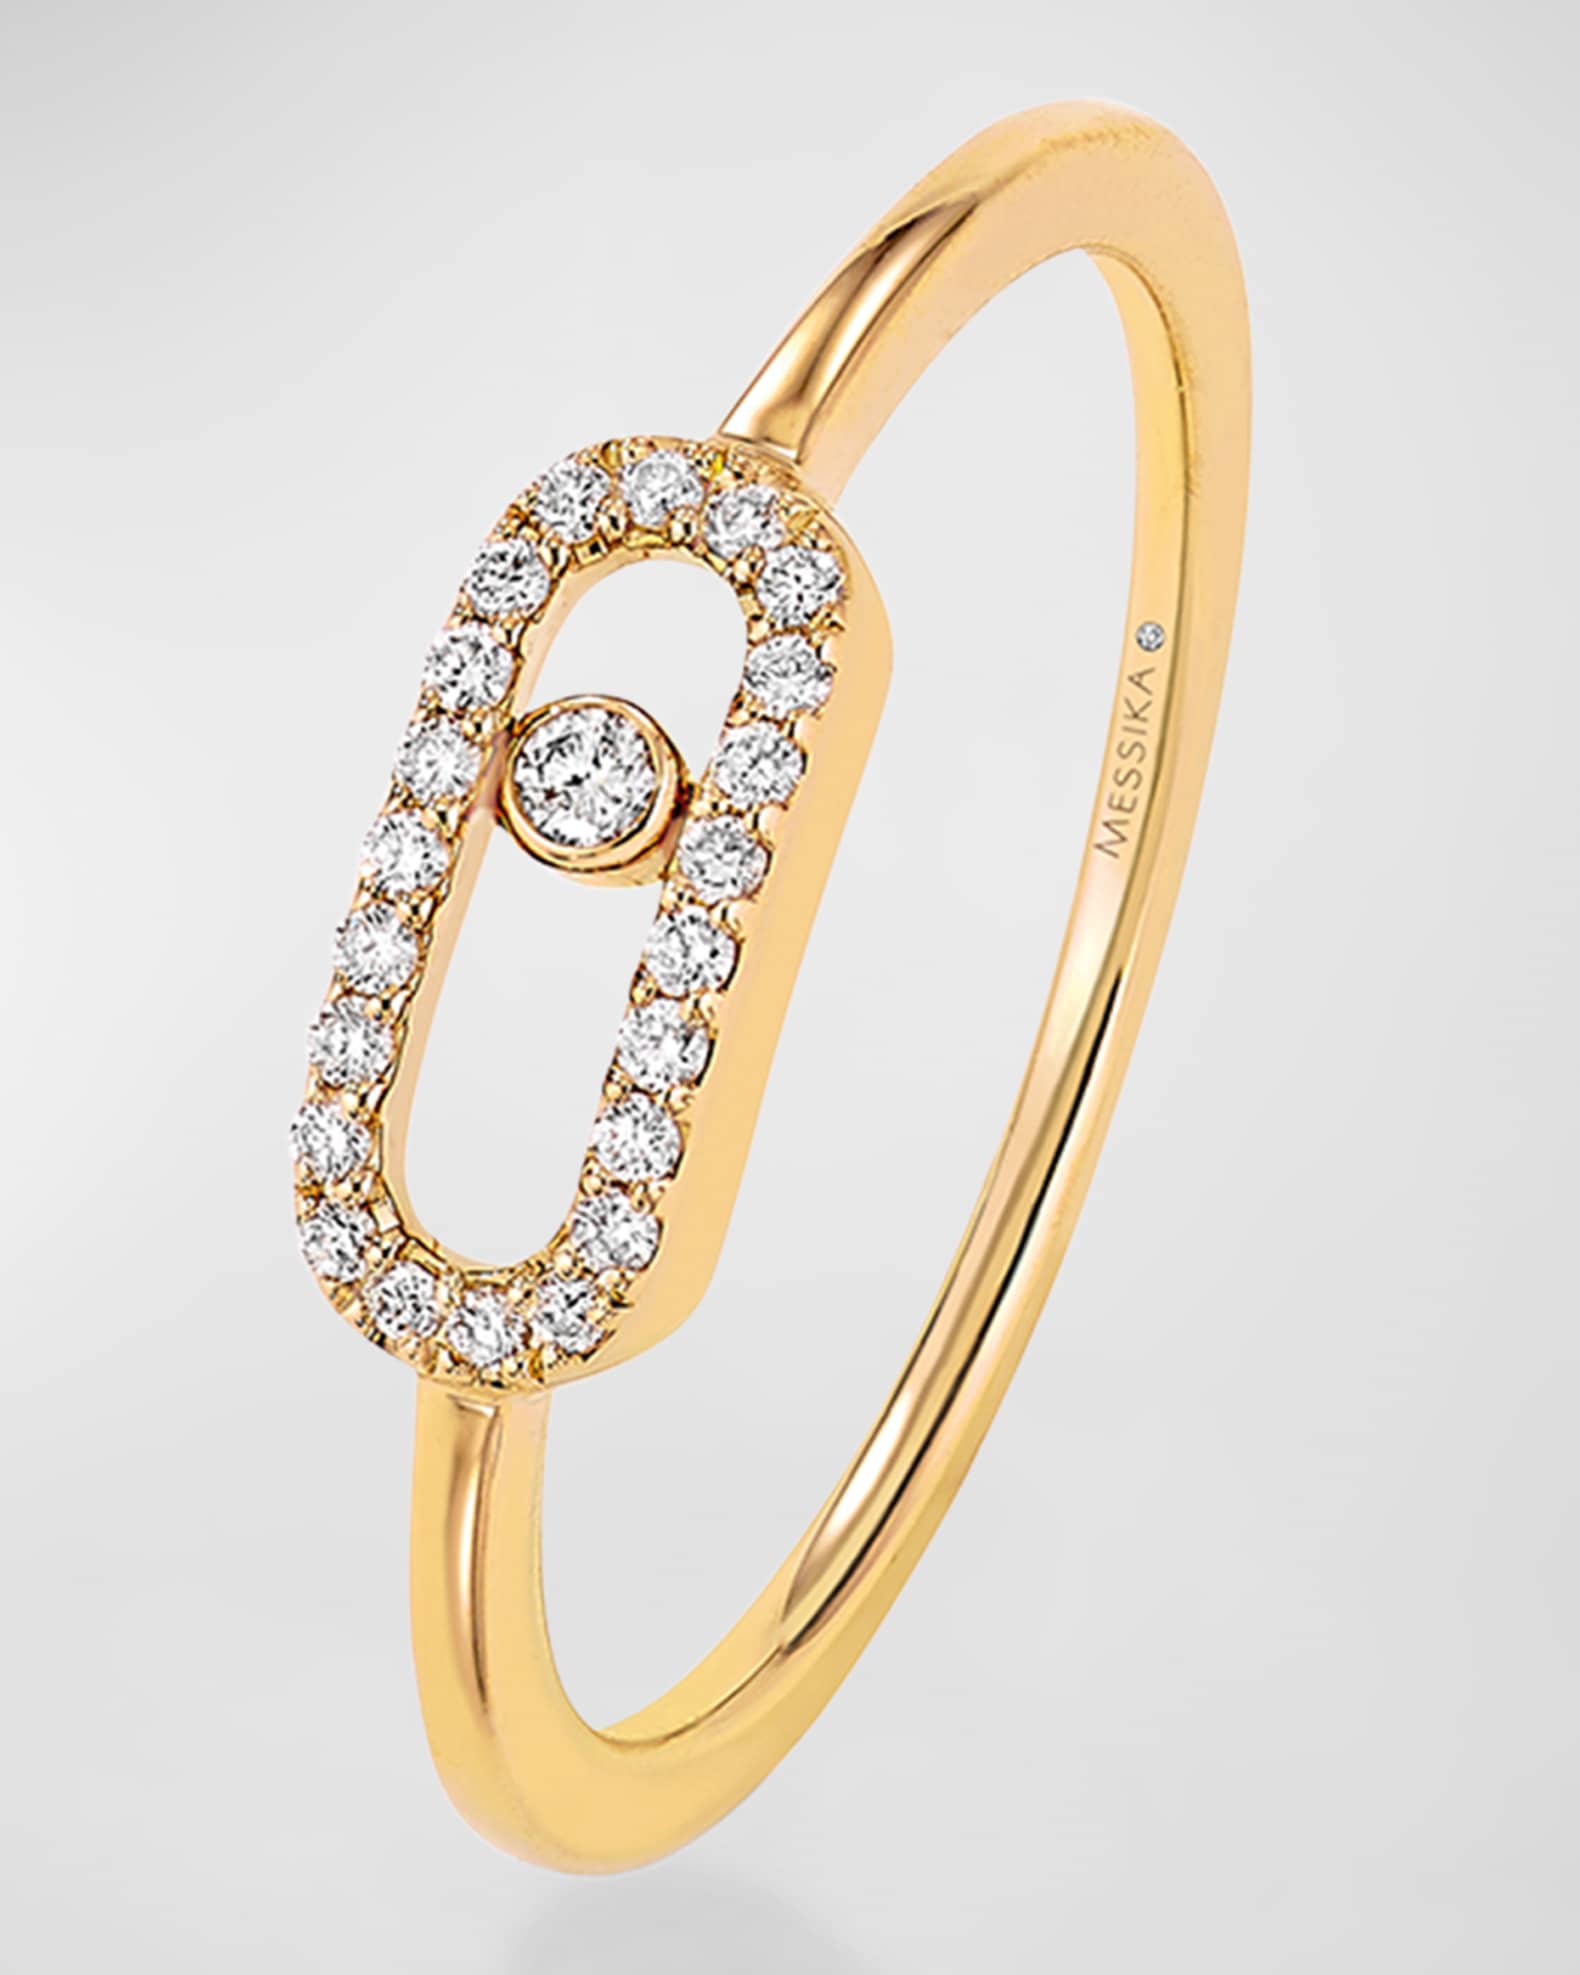 Messika Move Uno 18K Yellow Gold Diamond Ring, EU 52 / US 6 | Neiman Marcus